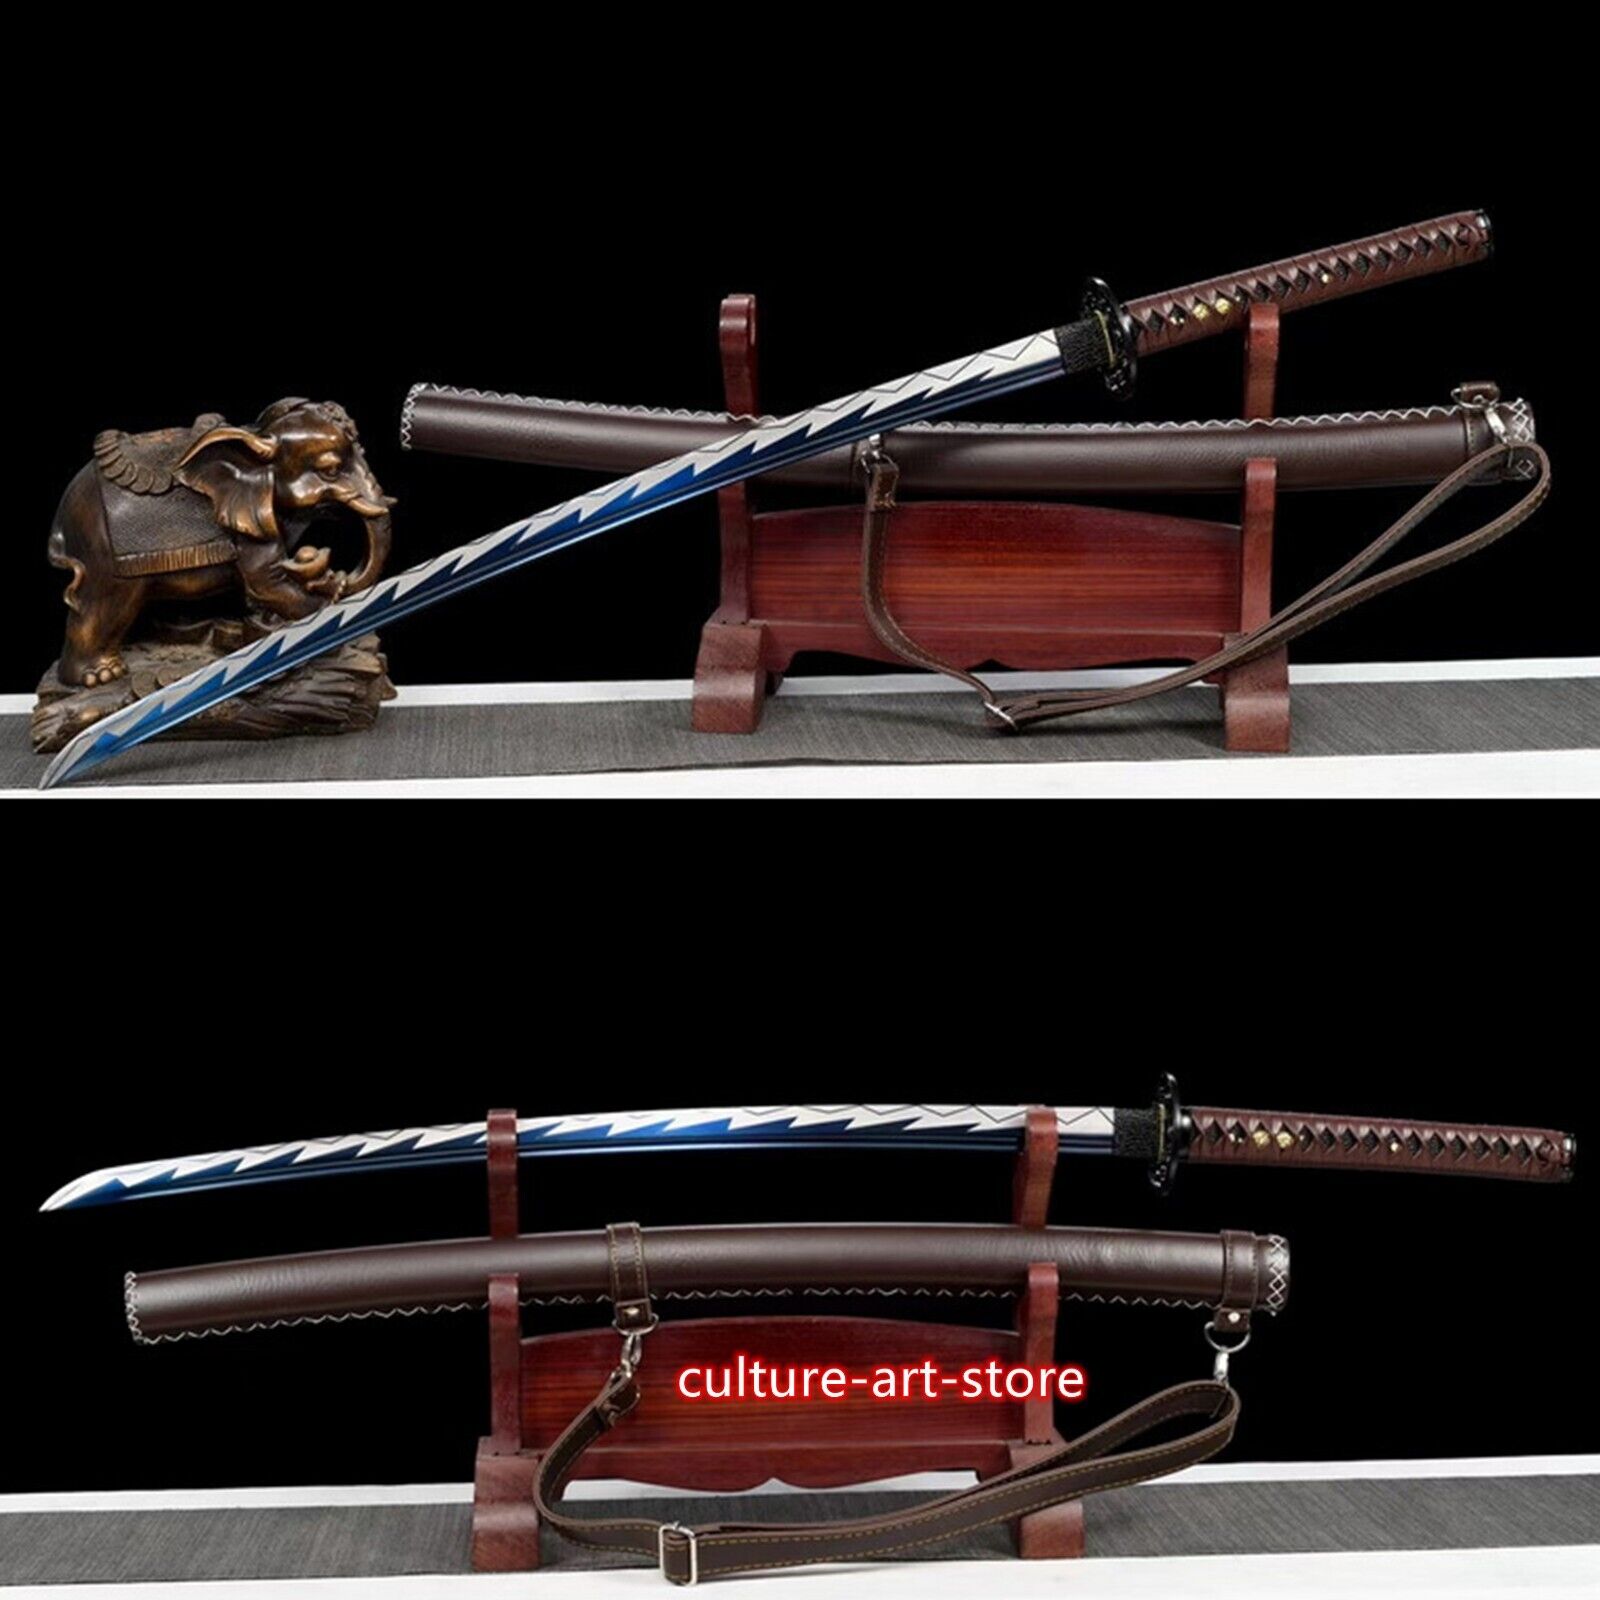 Blue Blade 1095 High Carbon steel Handmade Japanese Samurai Sword Katana Sharp